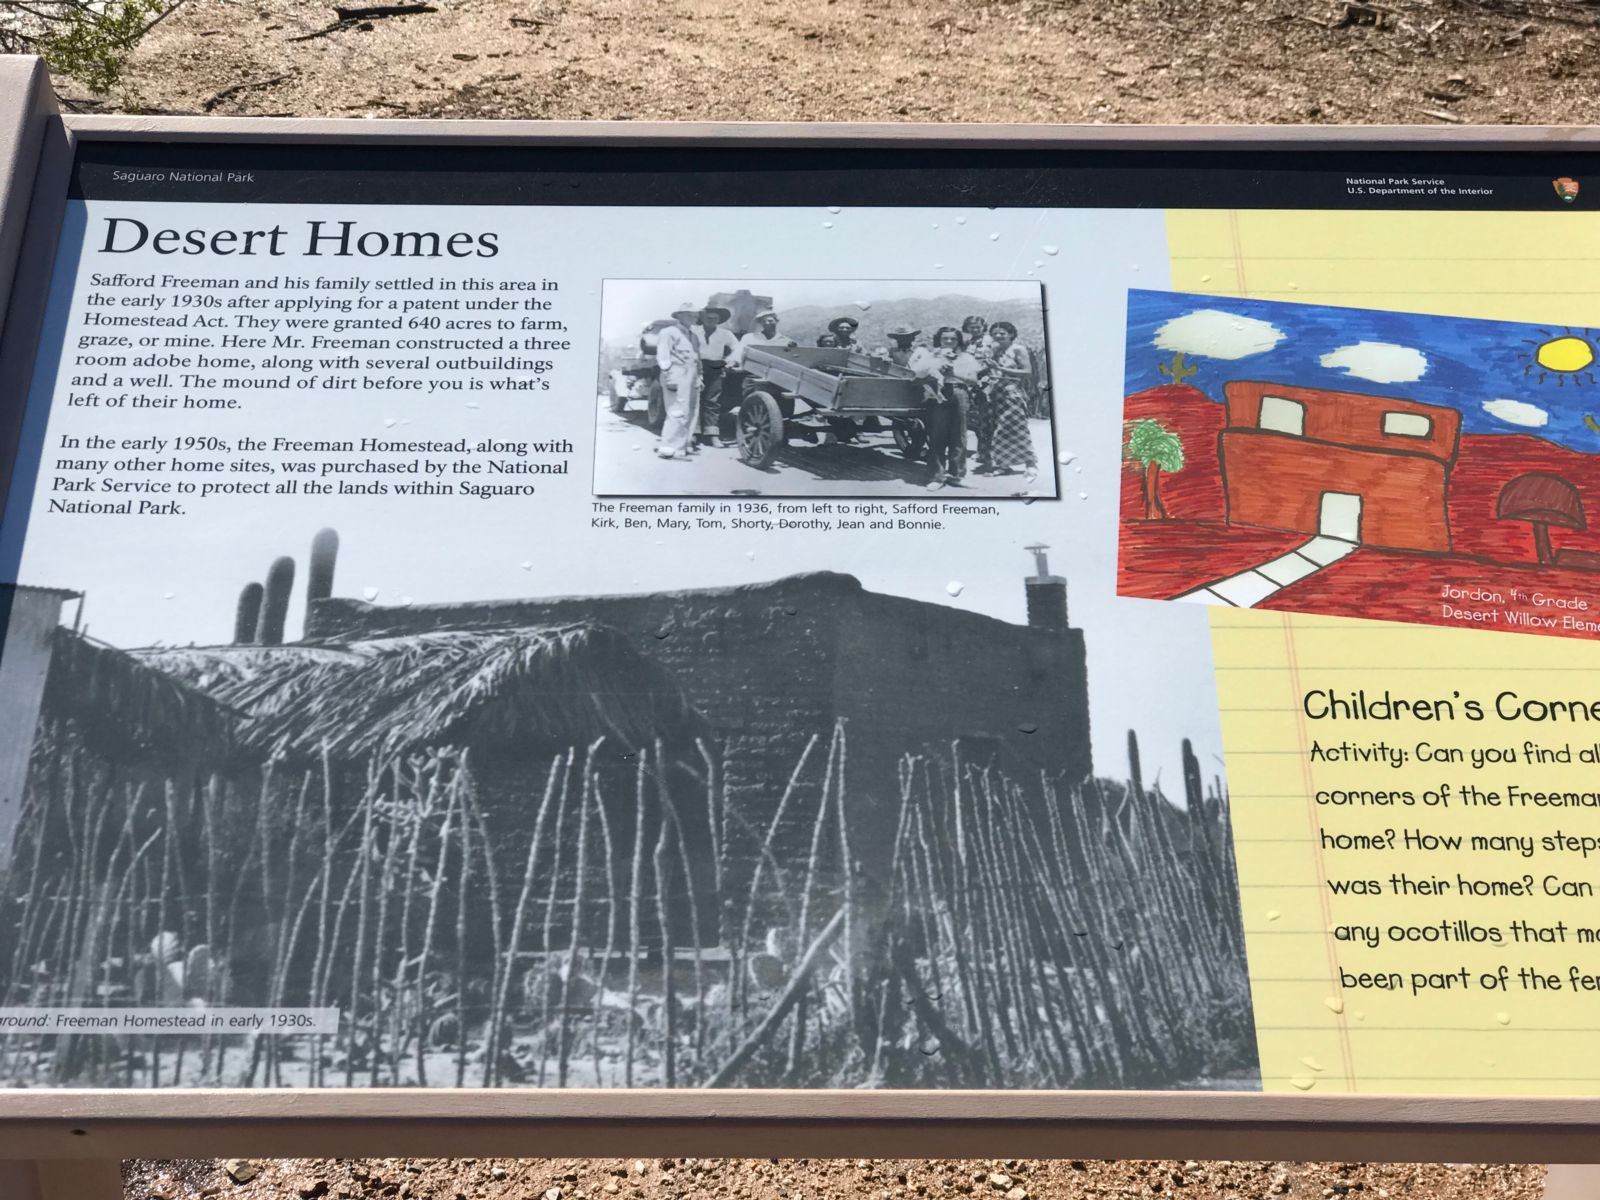 Saguaro National Park plaque with information on Desert Homes